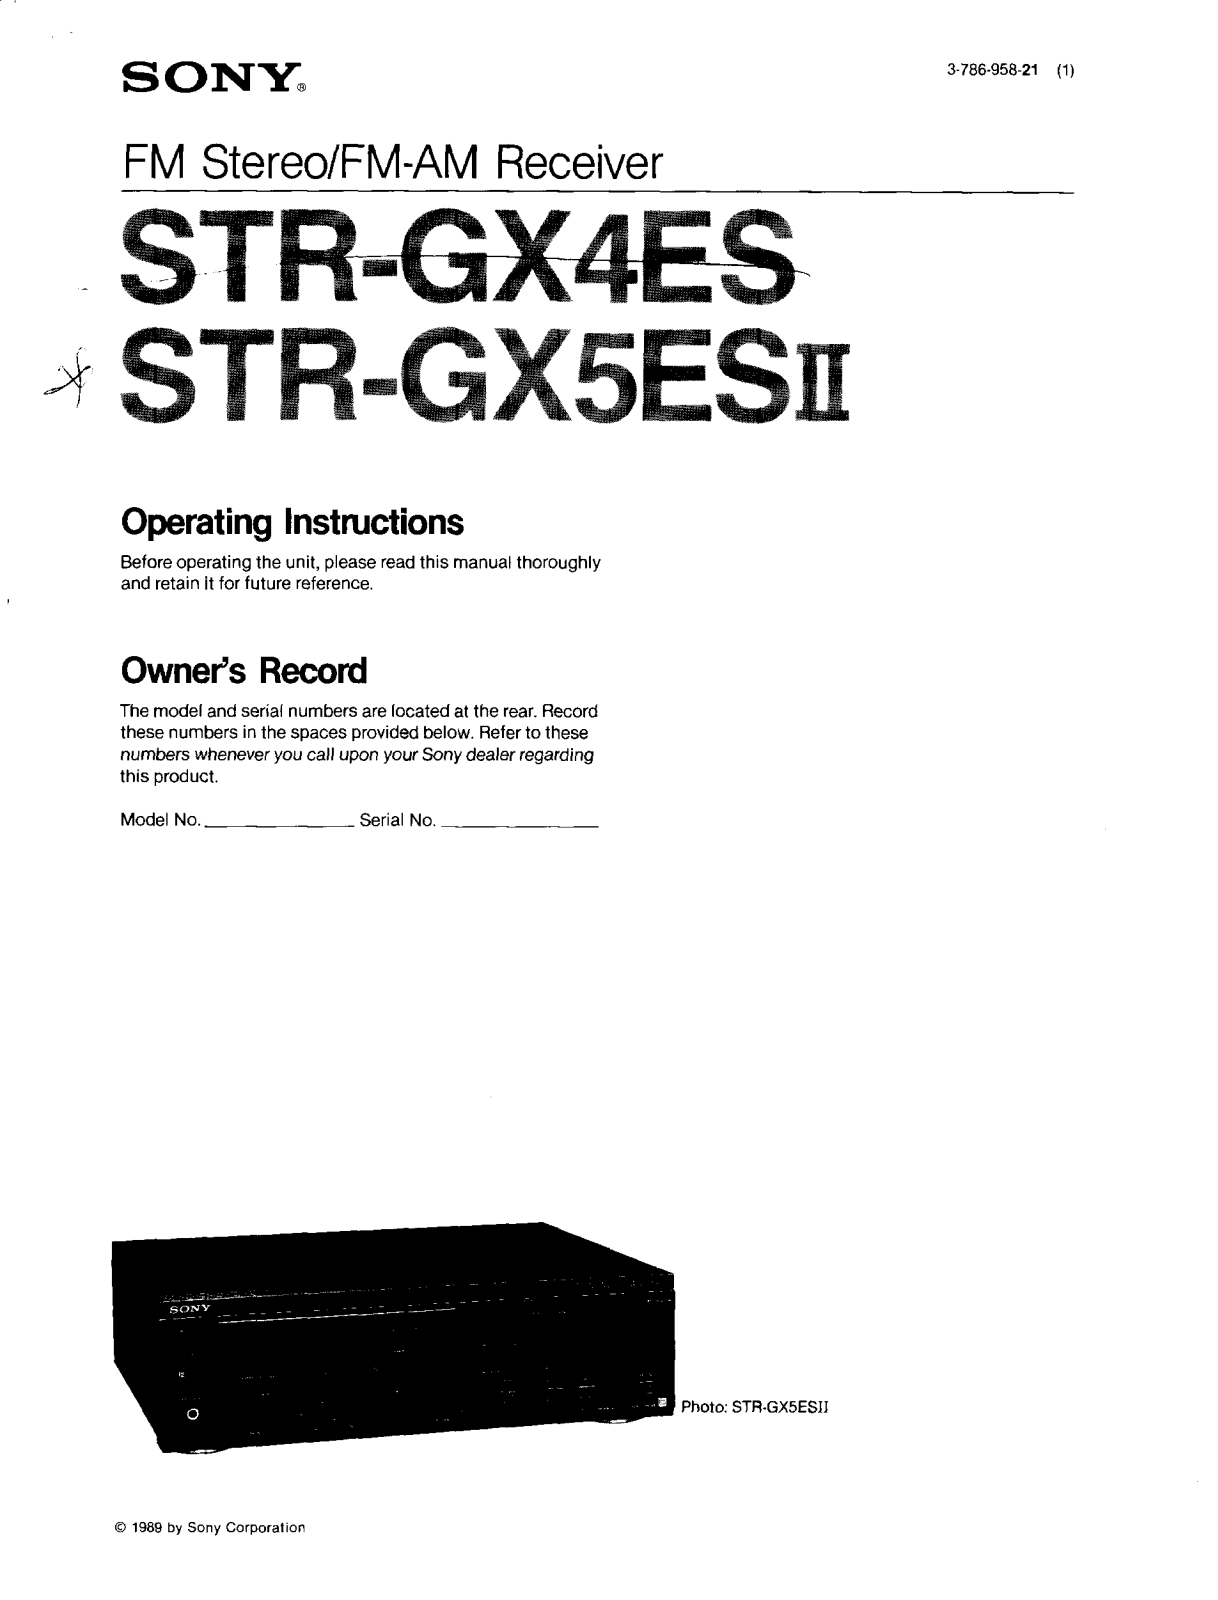 Sony ST-RGX4ES, ST-RGX5ES2 Operating Manual